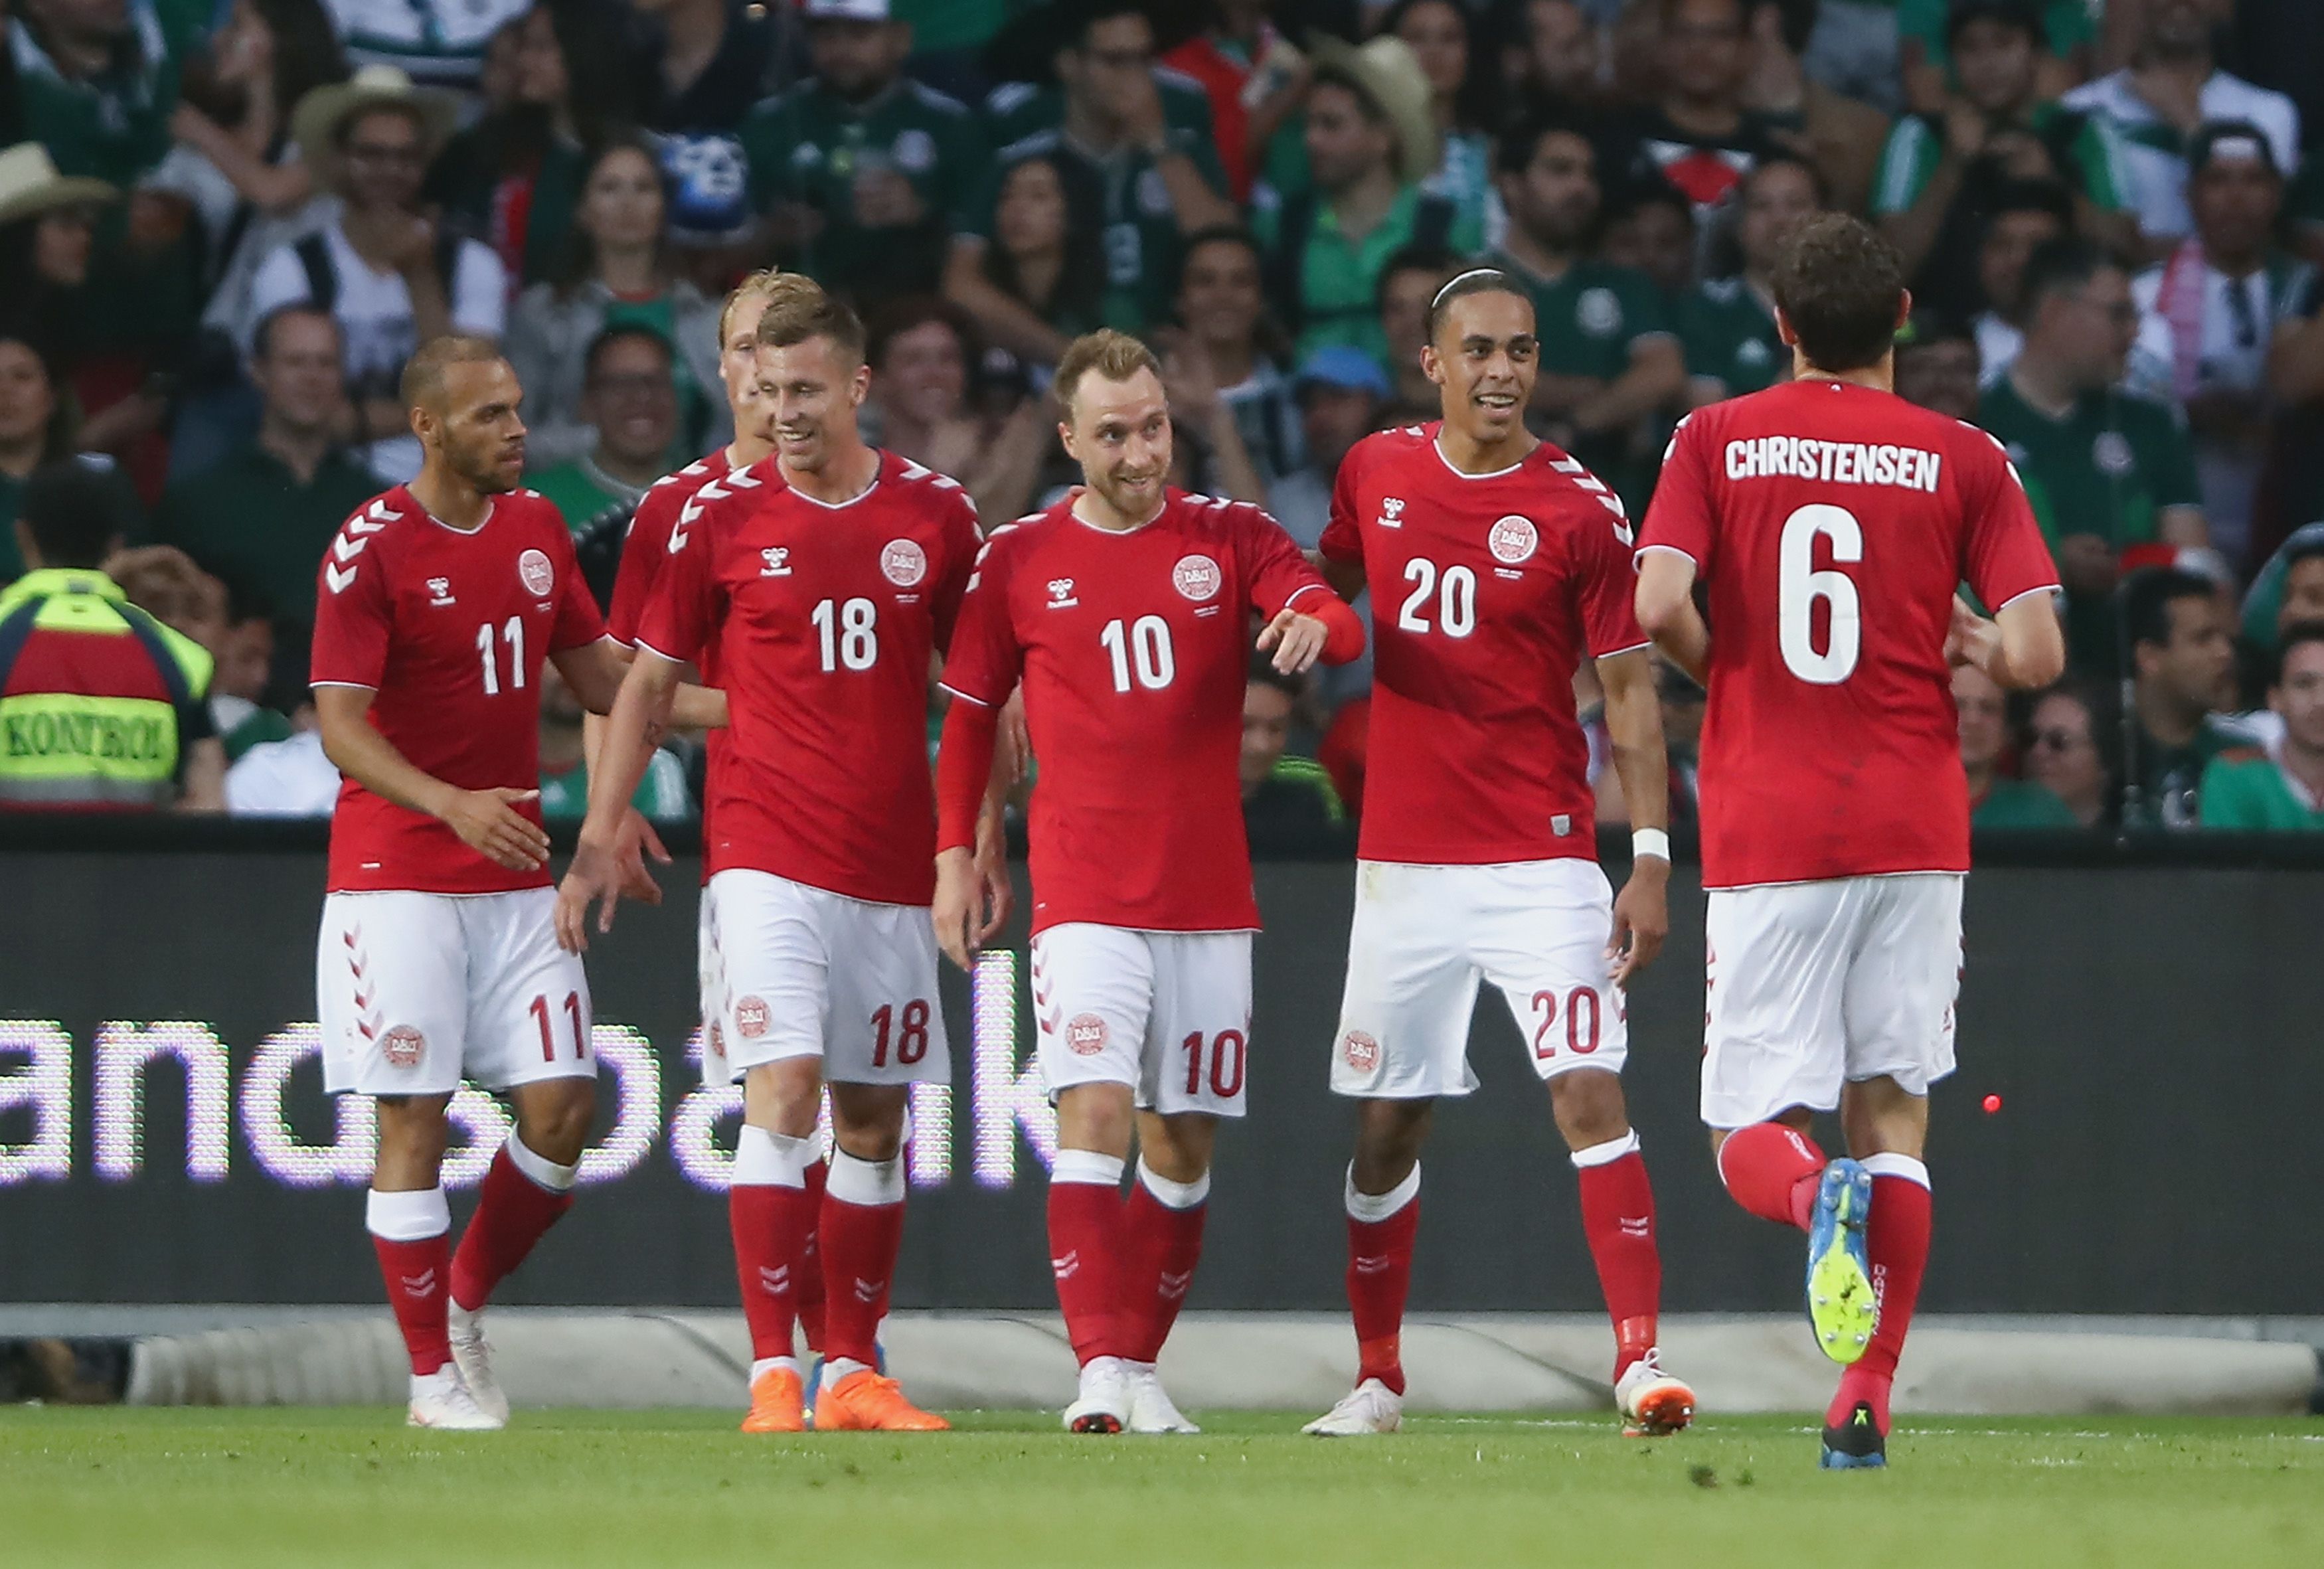 Дания — Босния и Герцеговина прогноз 6 июня 2021: ставки и коэффициенты на товарищеский матч